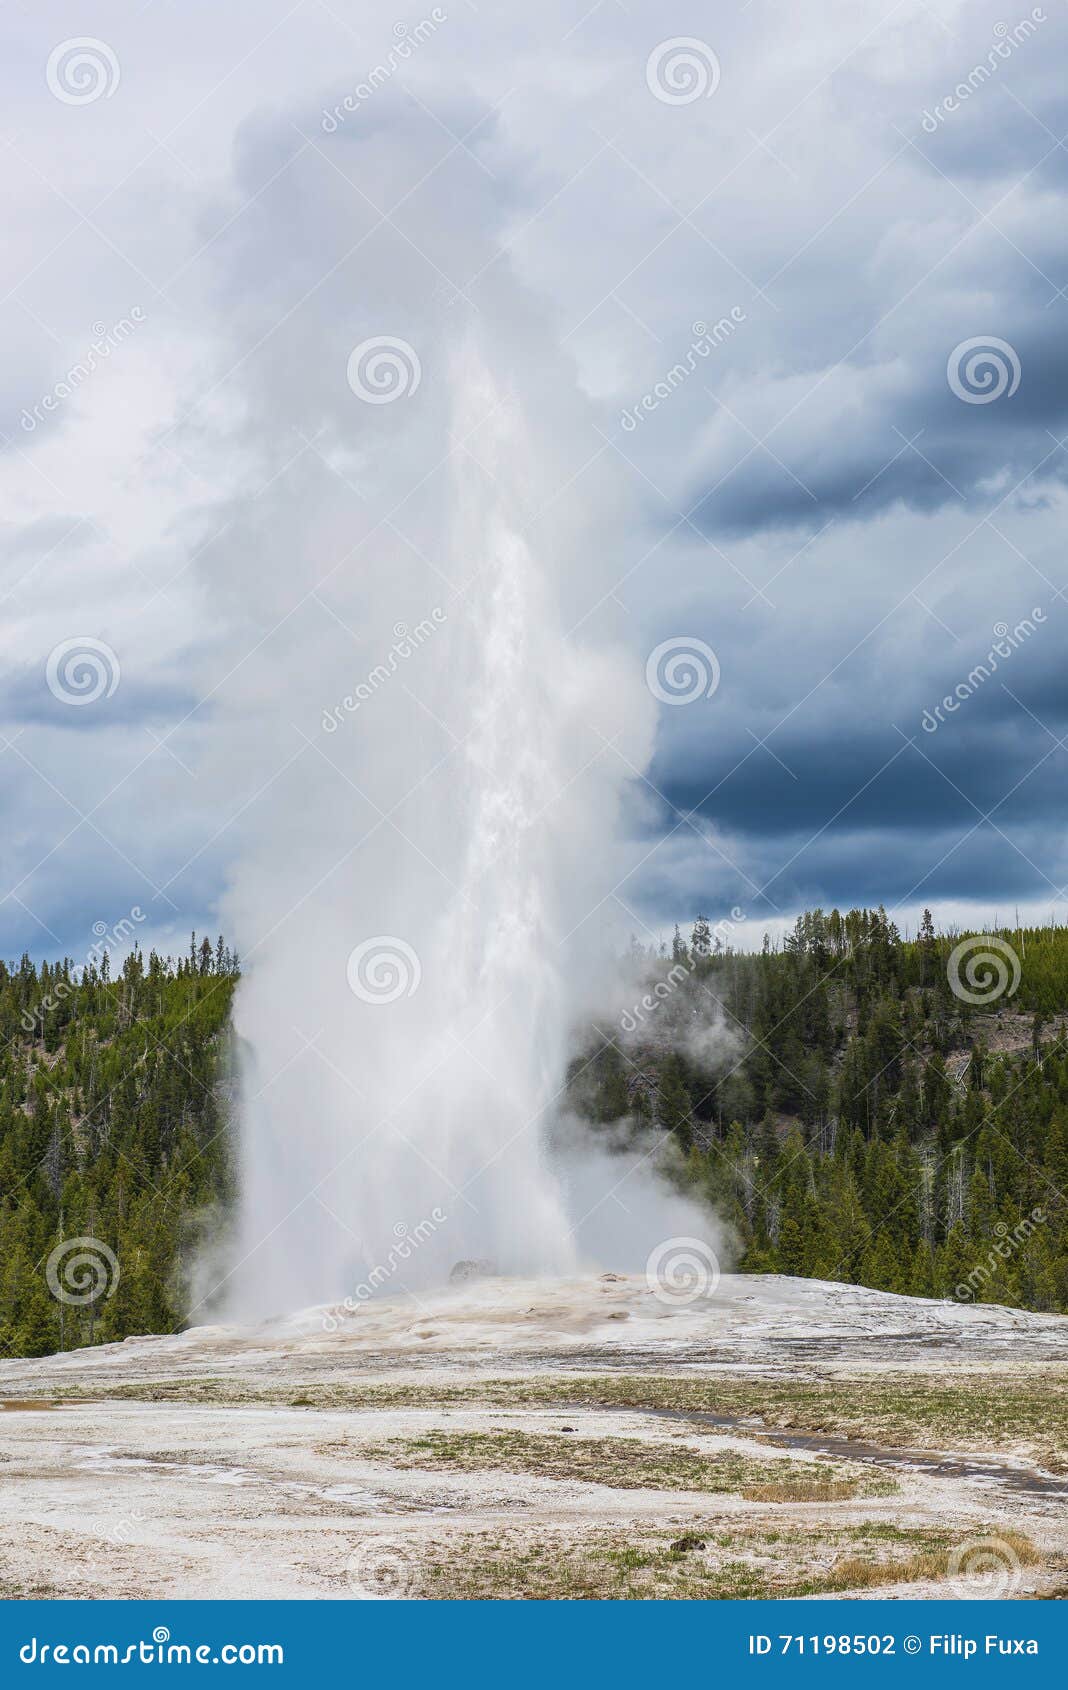 Vecchio geyser fedele. Vecchia eruzione fedele del geyser Bacino superiore del geyser (vecchia area fedele), parco nazionale di Yellowstone, U.S.A.